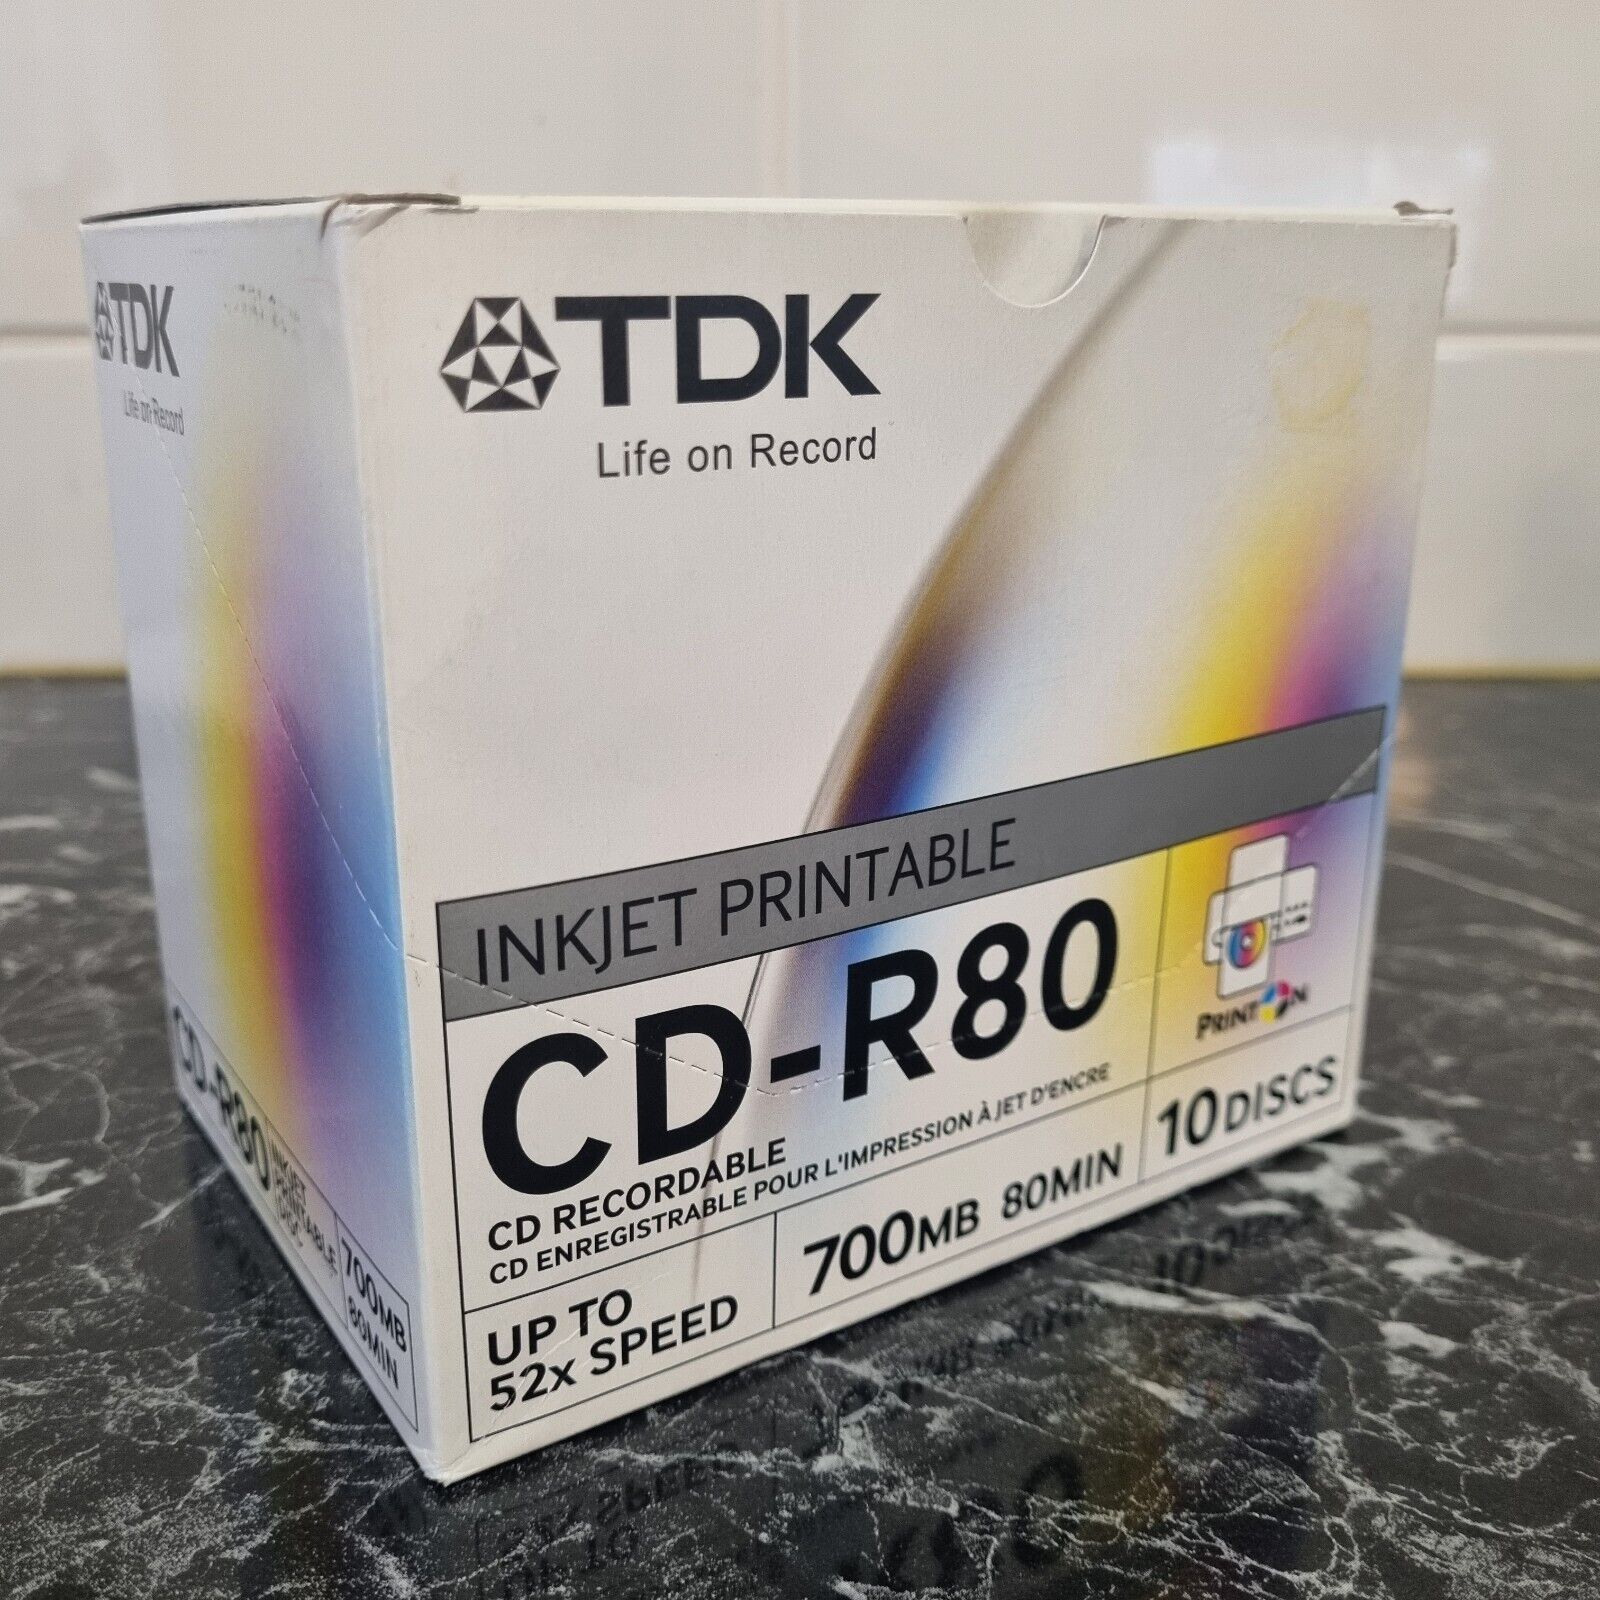 TDK CD-R 80 Recordable Blank Discs 10 PACK 80MIN 700MB 52x CD-R80JCA Sealed